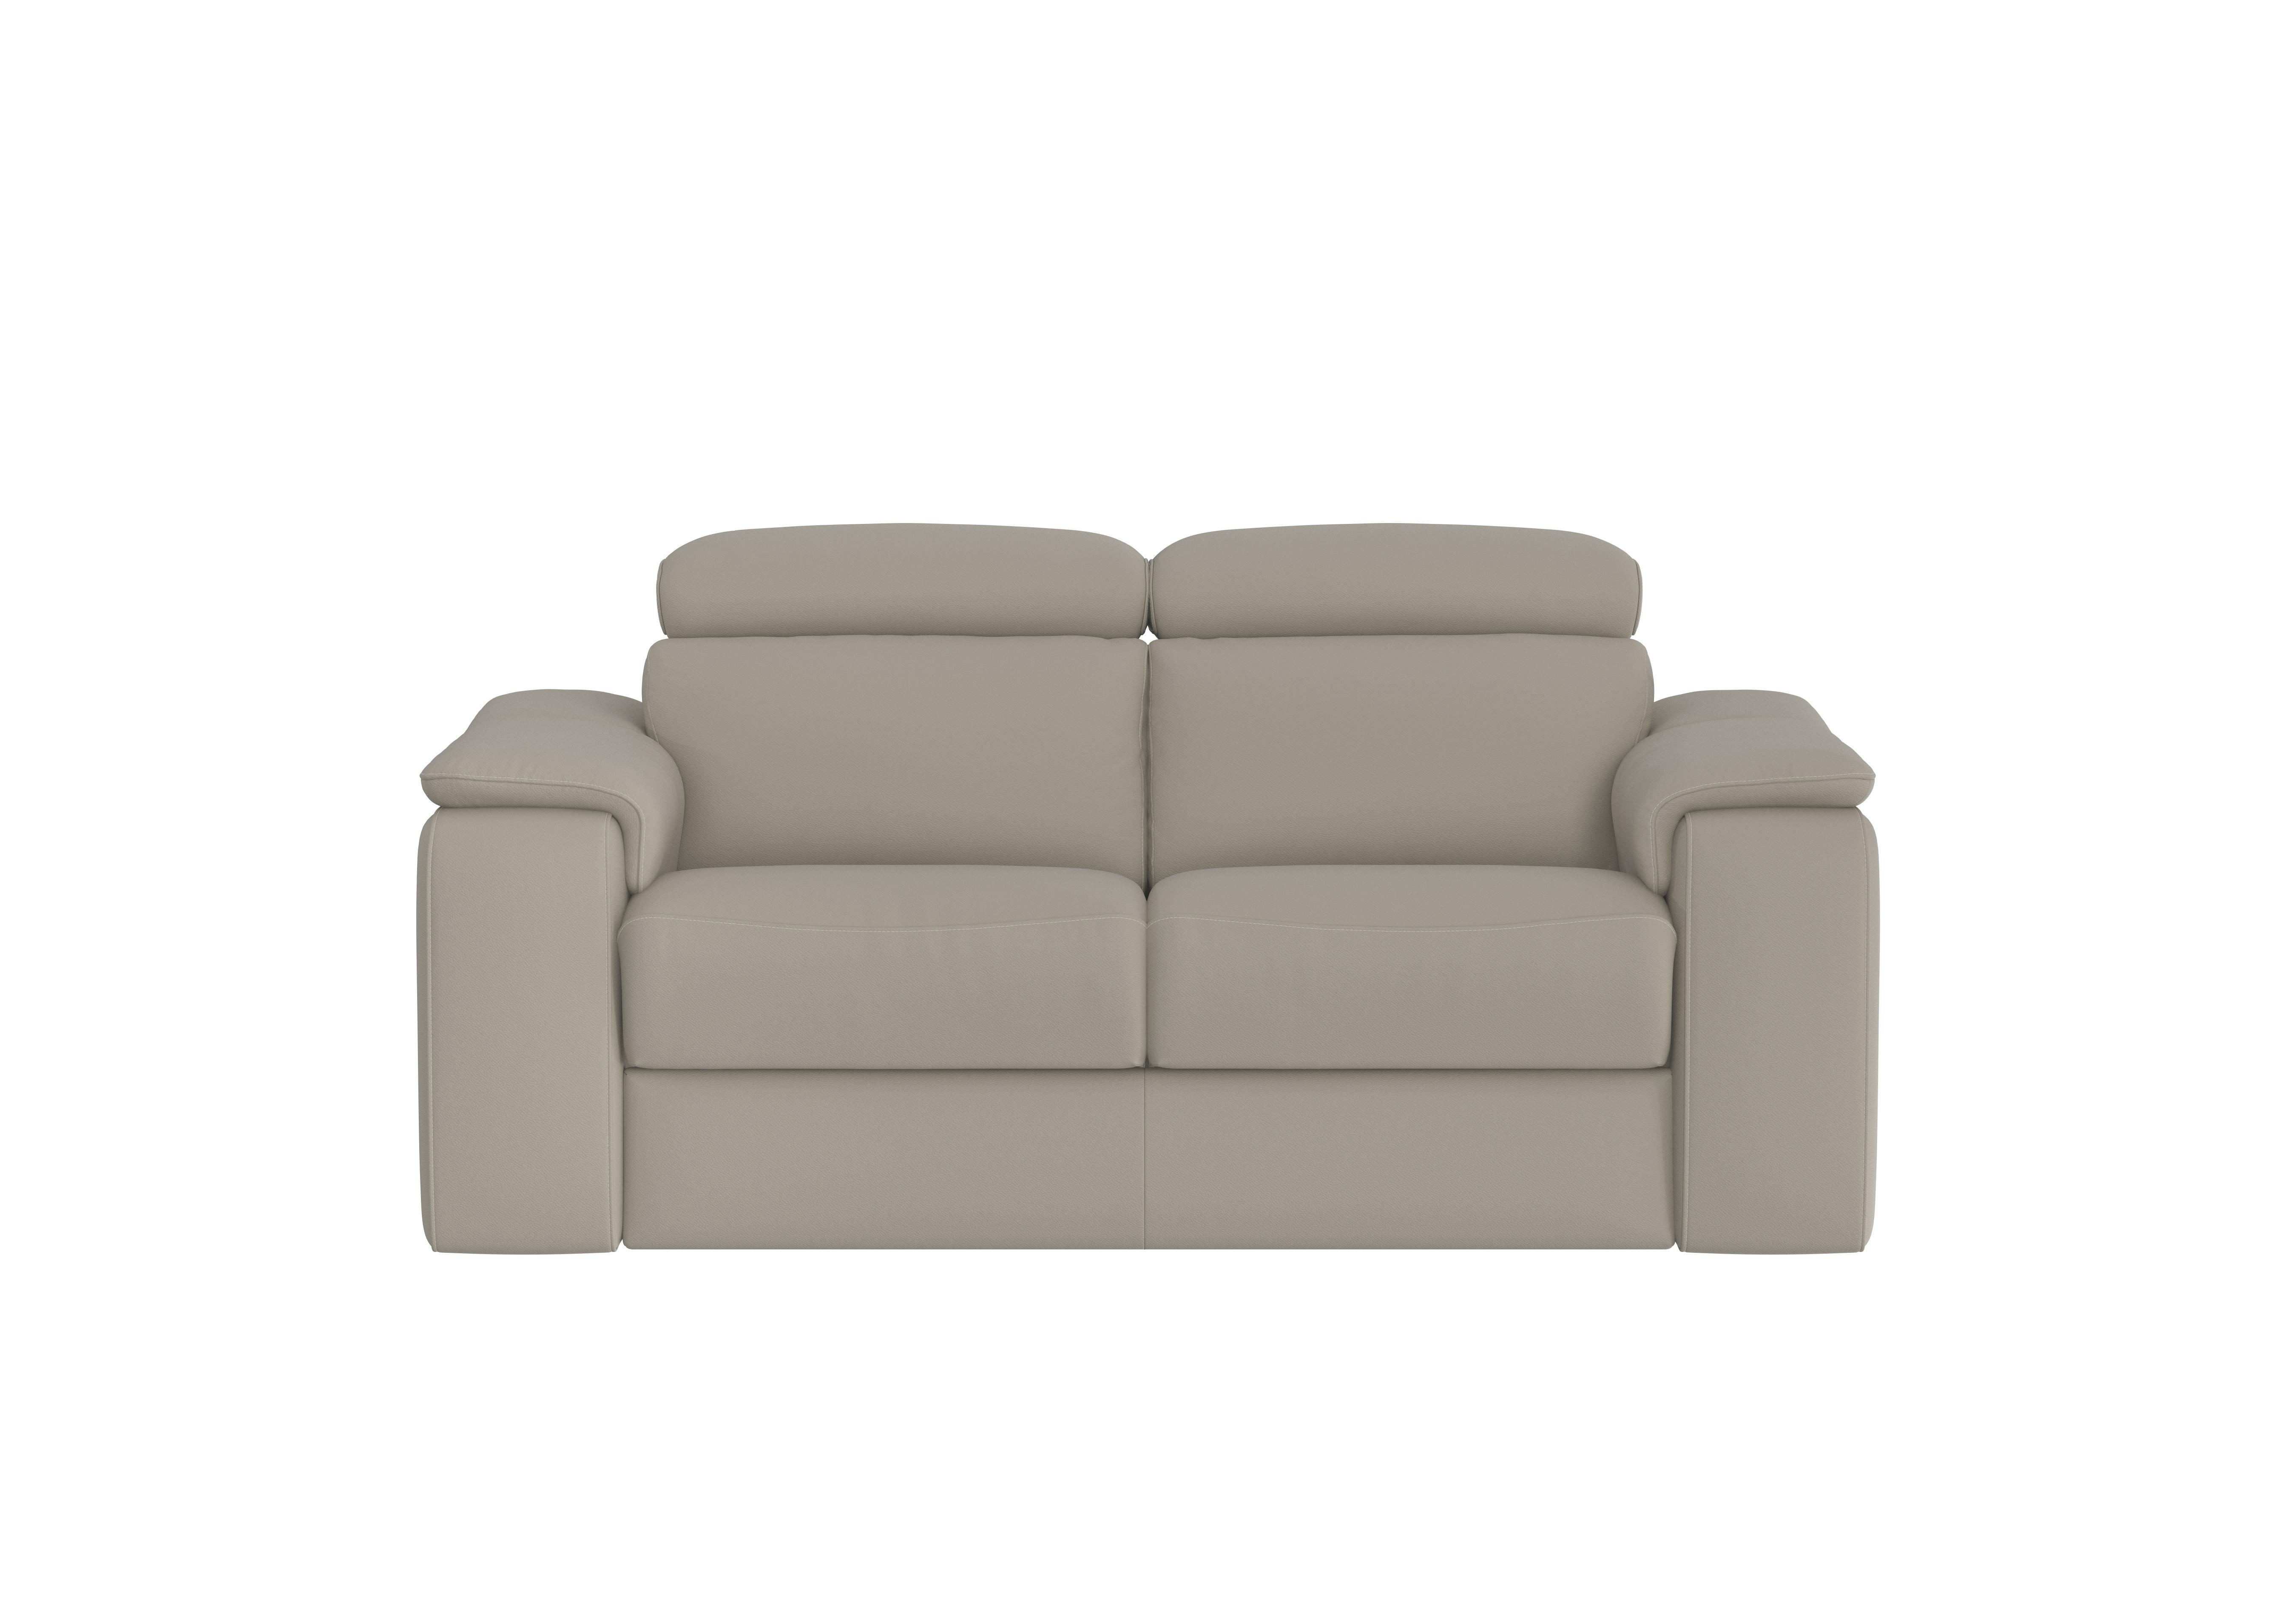 Davide 2 Seater Leather Sofa in 328 Torello Tortora on Furniture Village